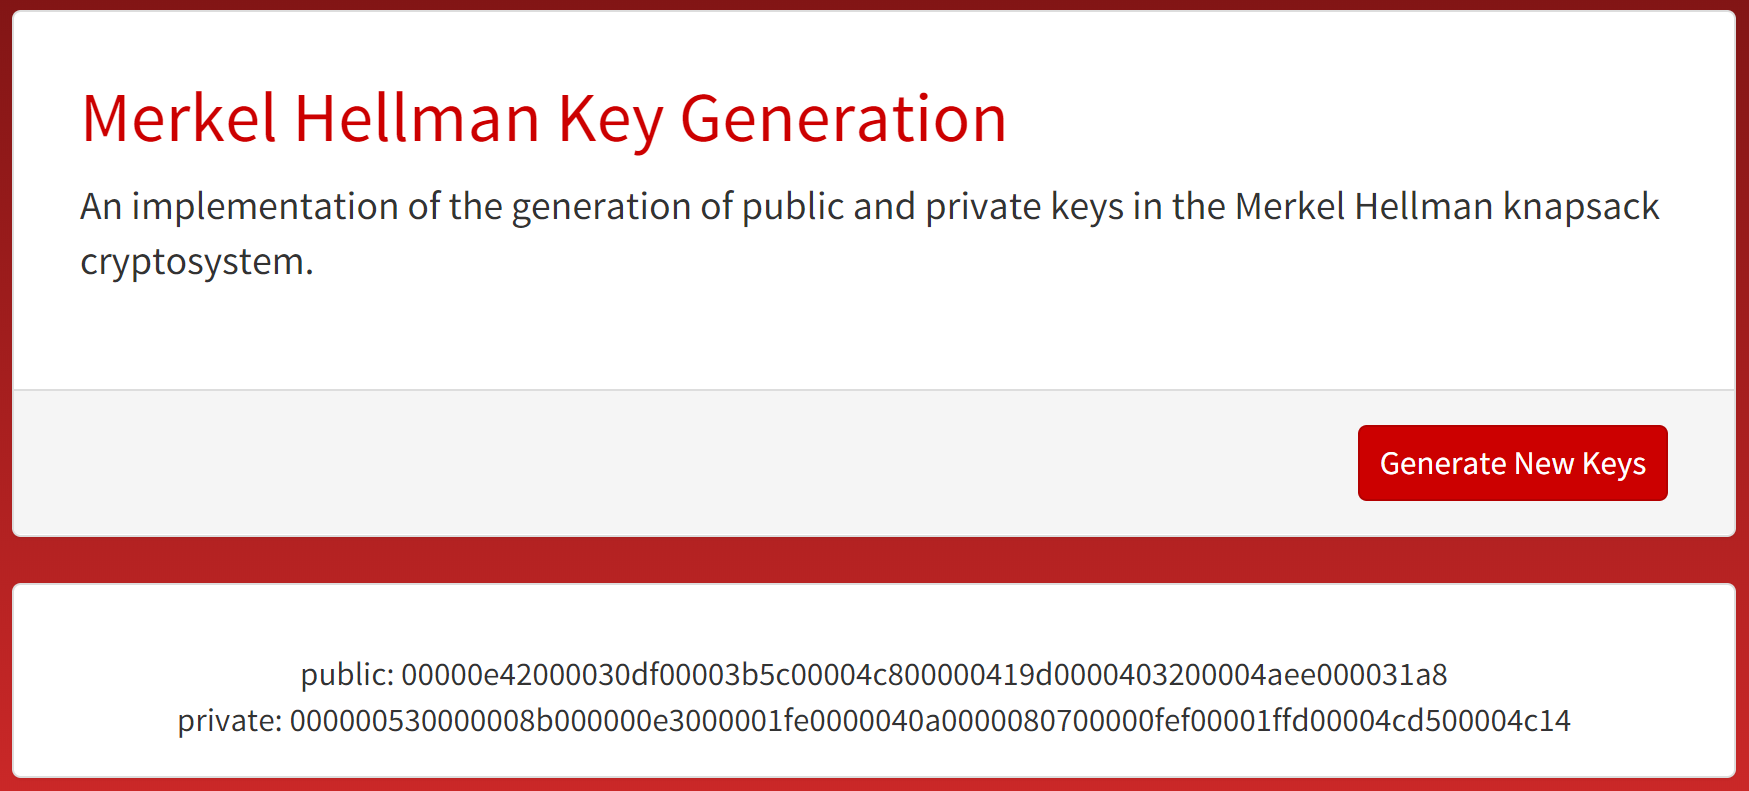 Key Generation Microsite